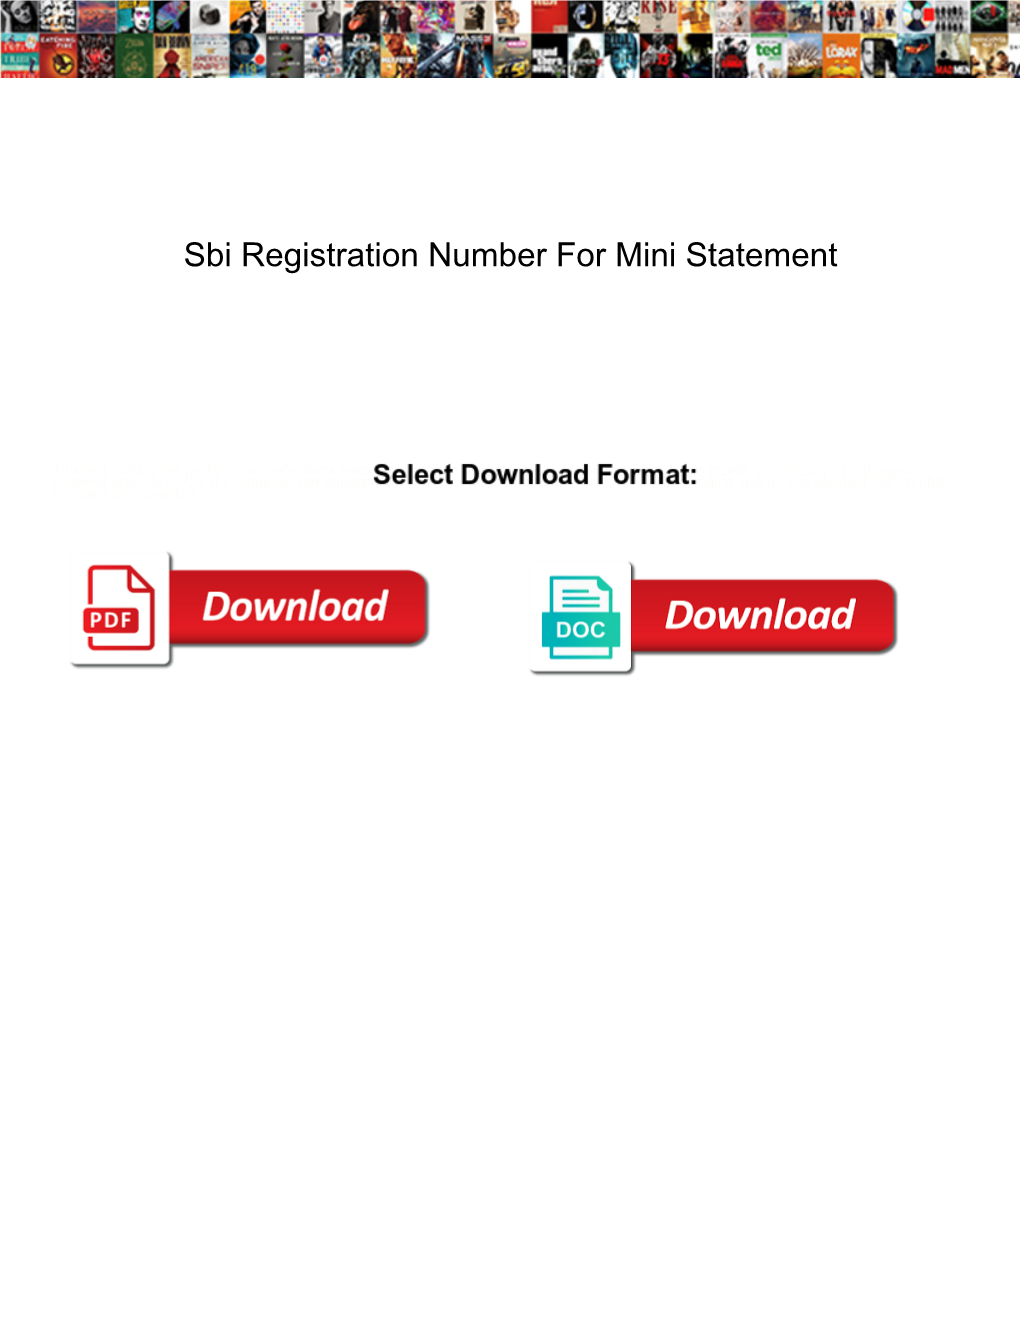 Sbi Registration Number for Mini Statement